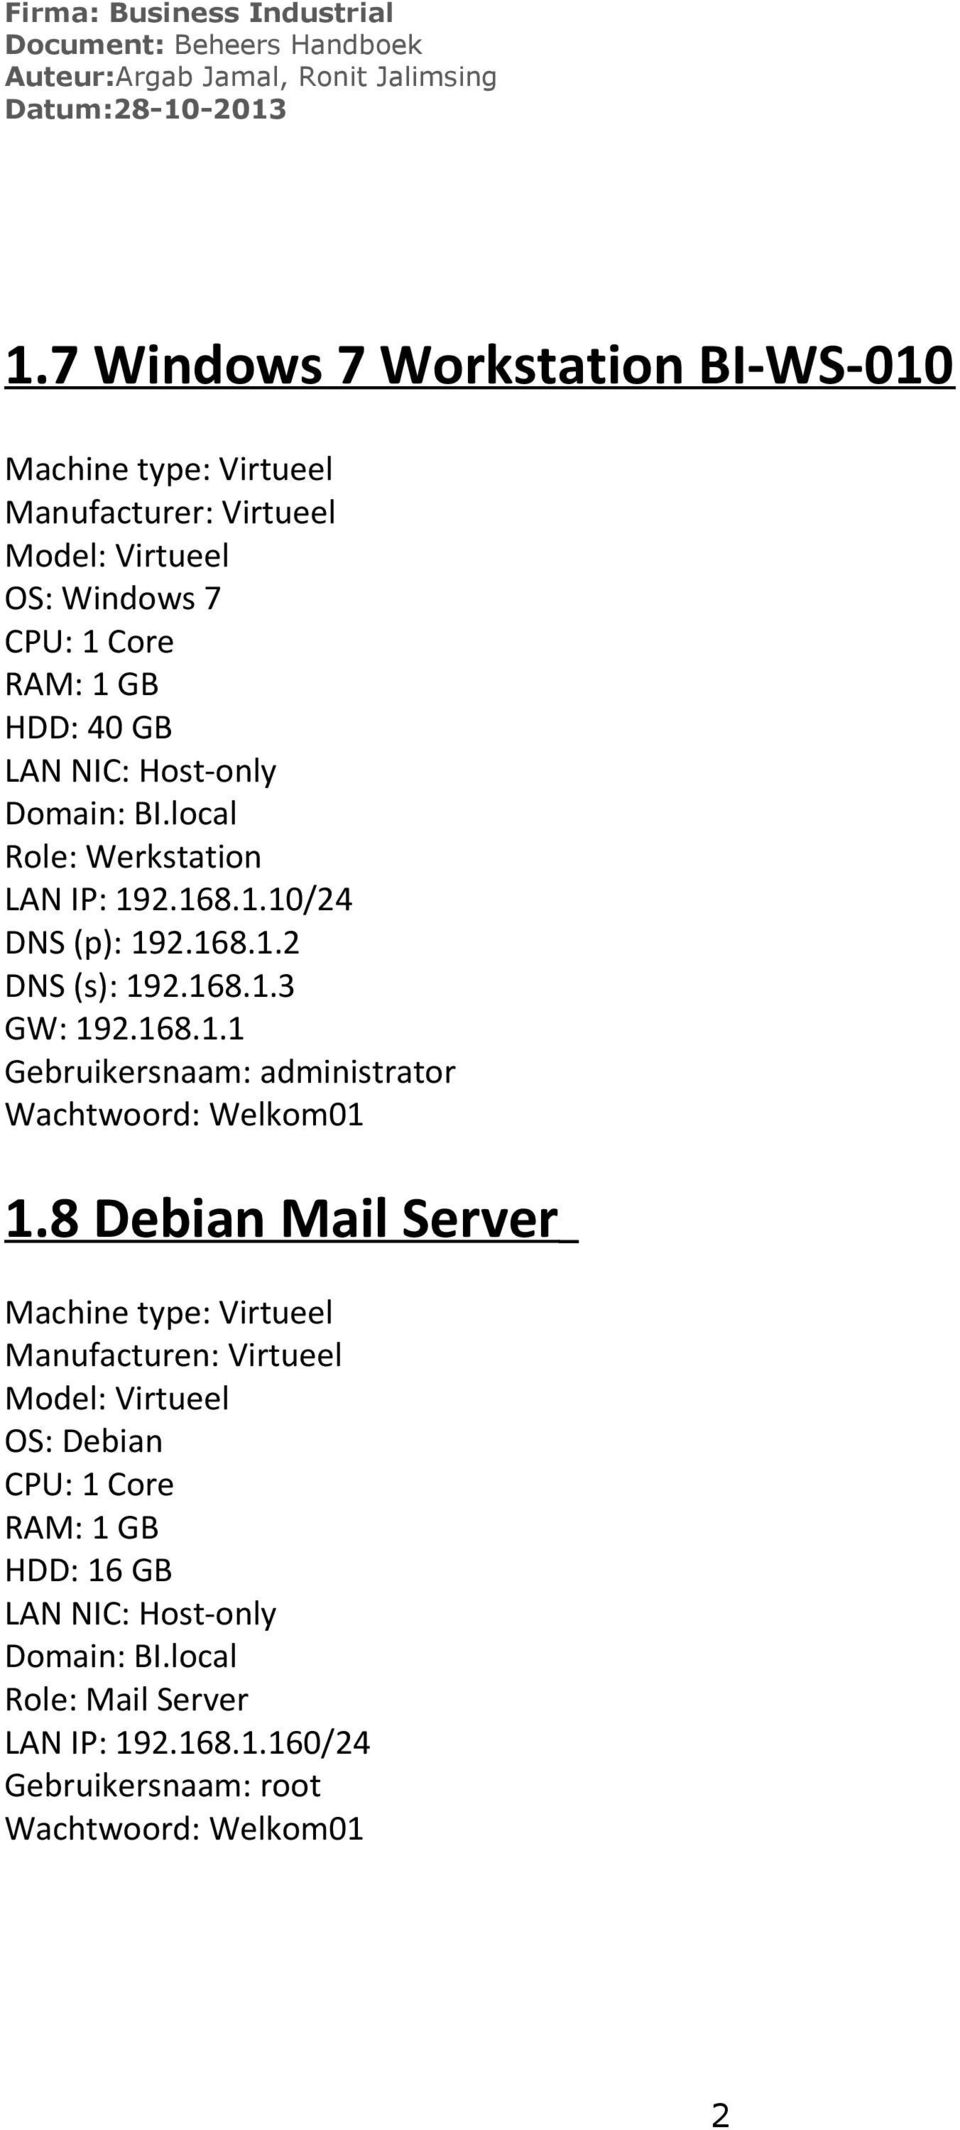 NIC: Host-only Domain: BI.local Role: Werkstation LAN IP: 19.168.1.10/4 DNS (p): 19.168.1. DNS (s): 19.168.1.3 GW: 19.168.1.1 Gebruikersnaam: administrator Wachtwoord: Welkom01 1.